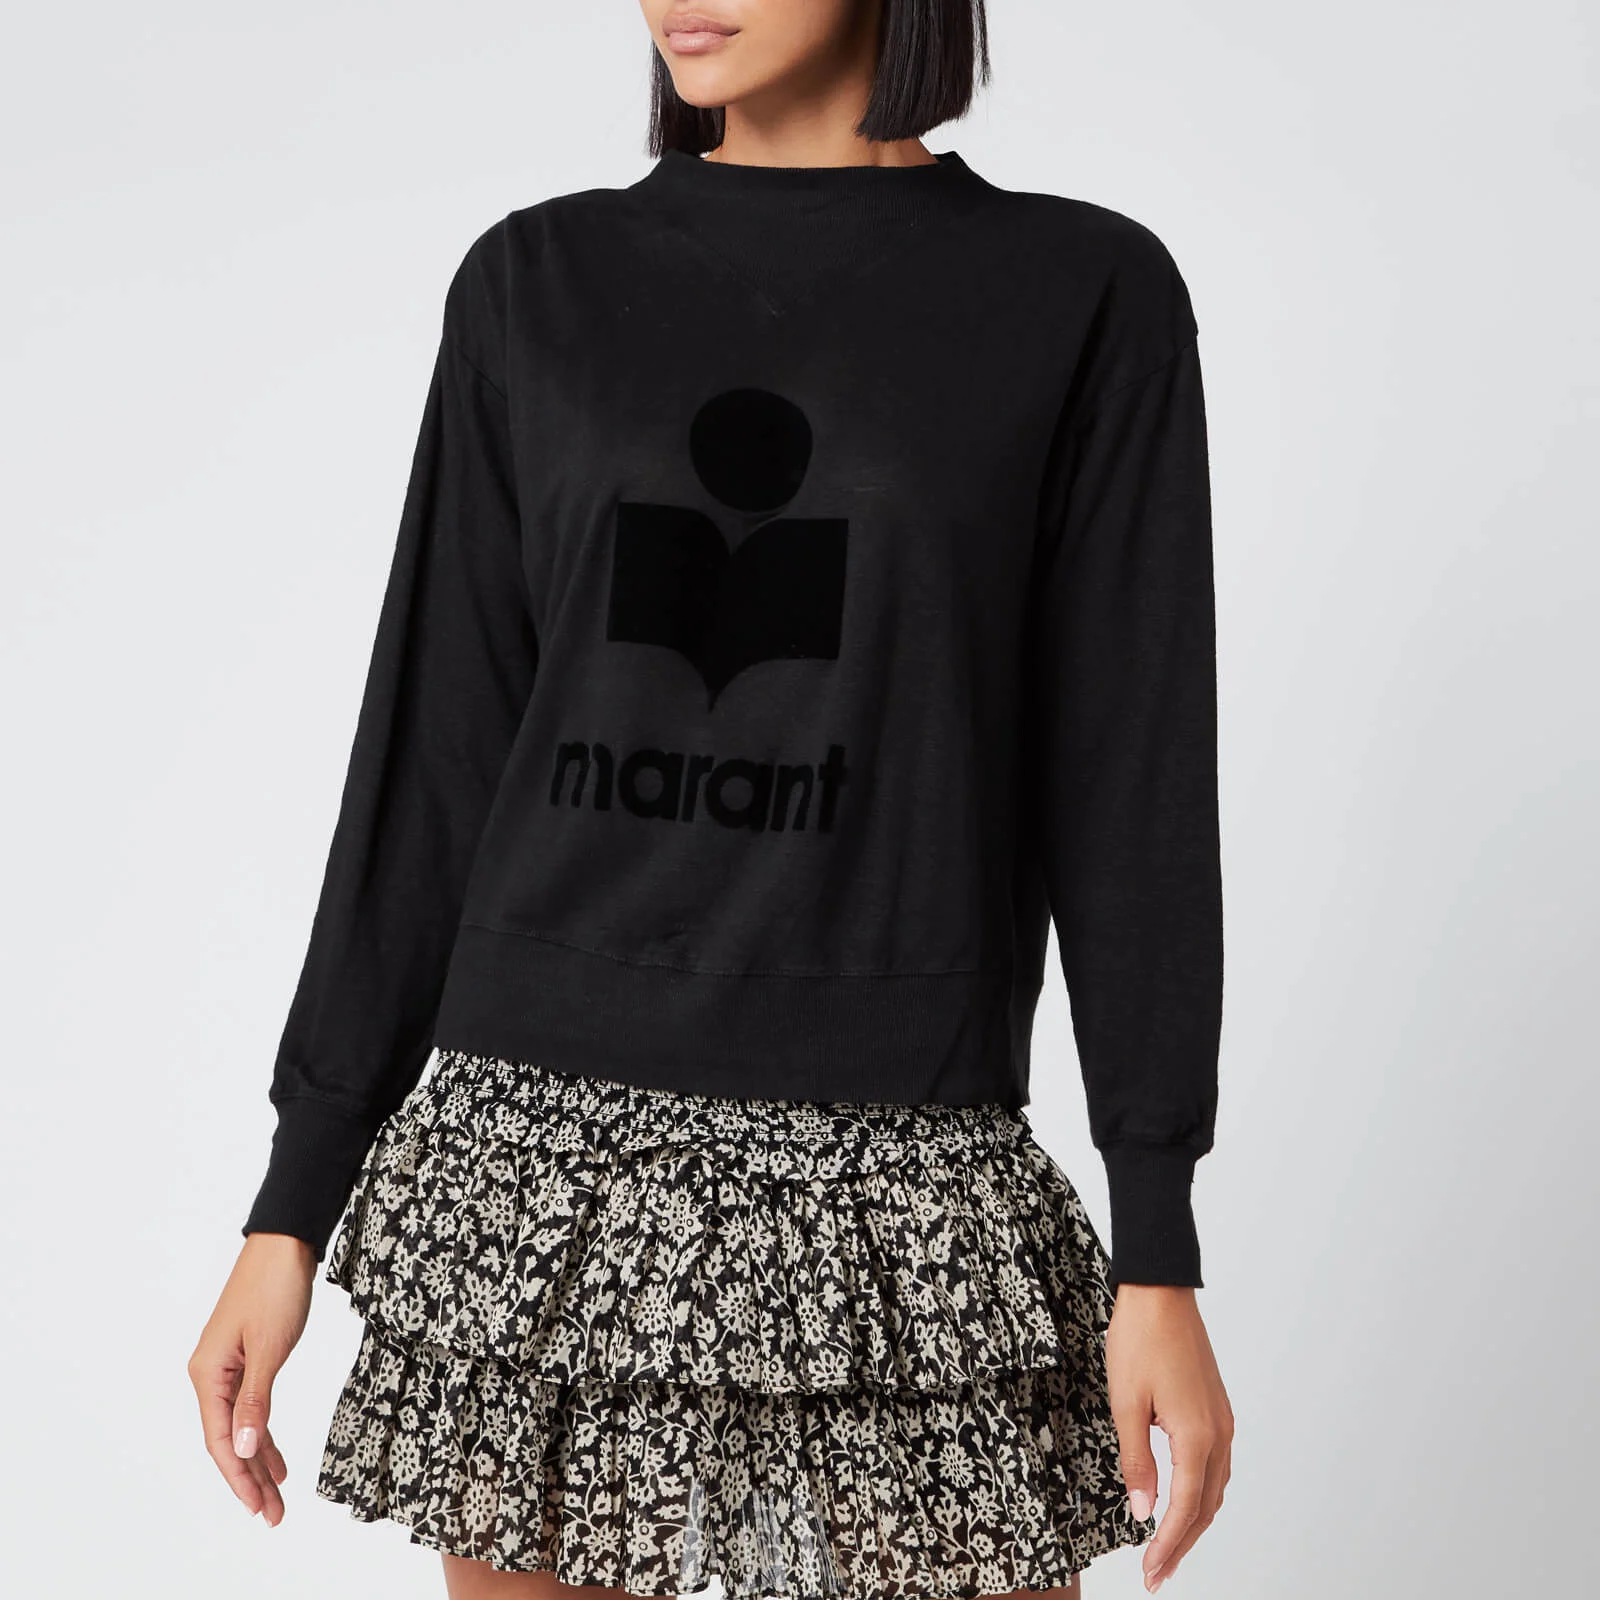 Marant Etoile Women's Kilsen Sweatshirt - Black Image 1